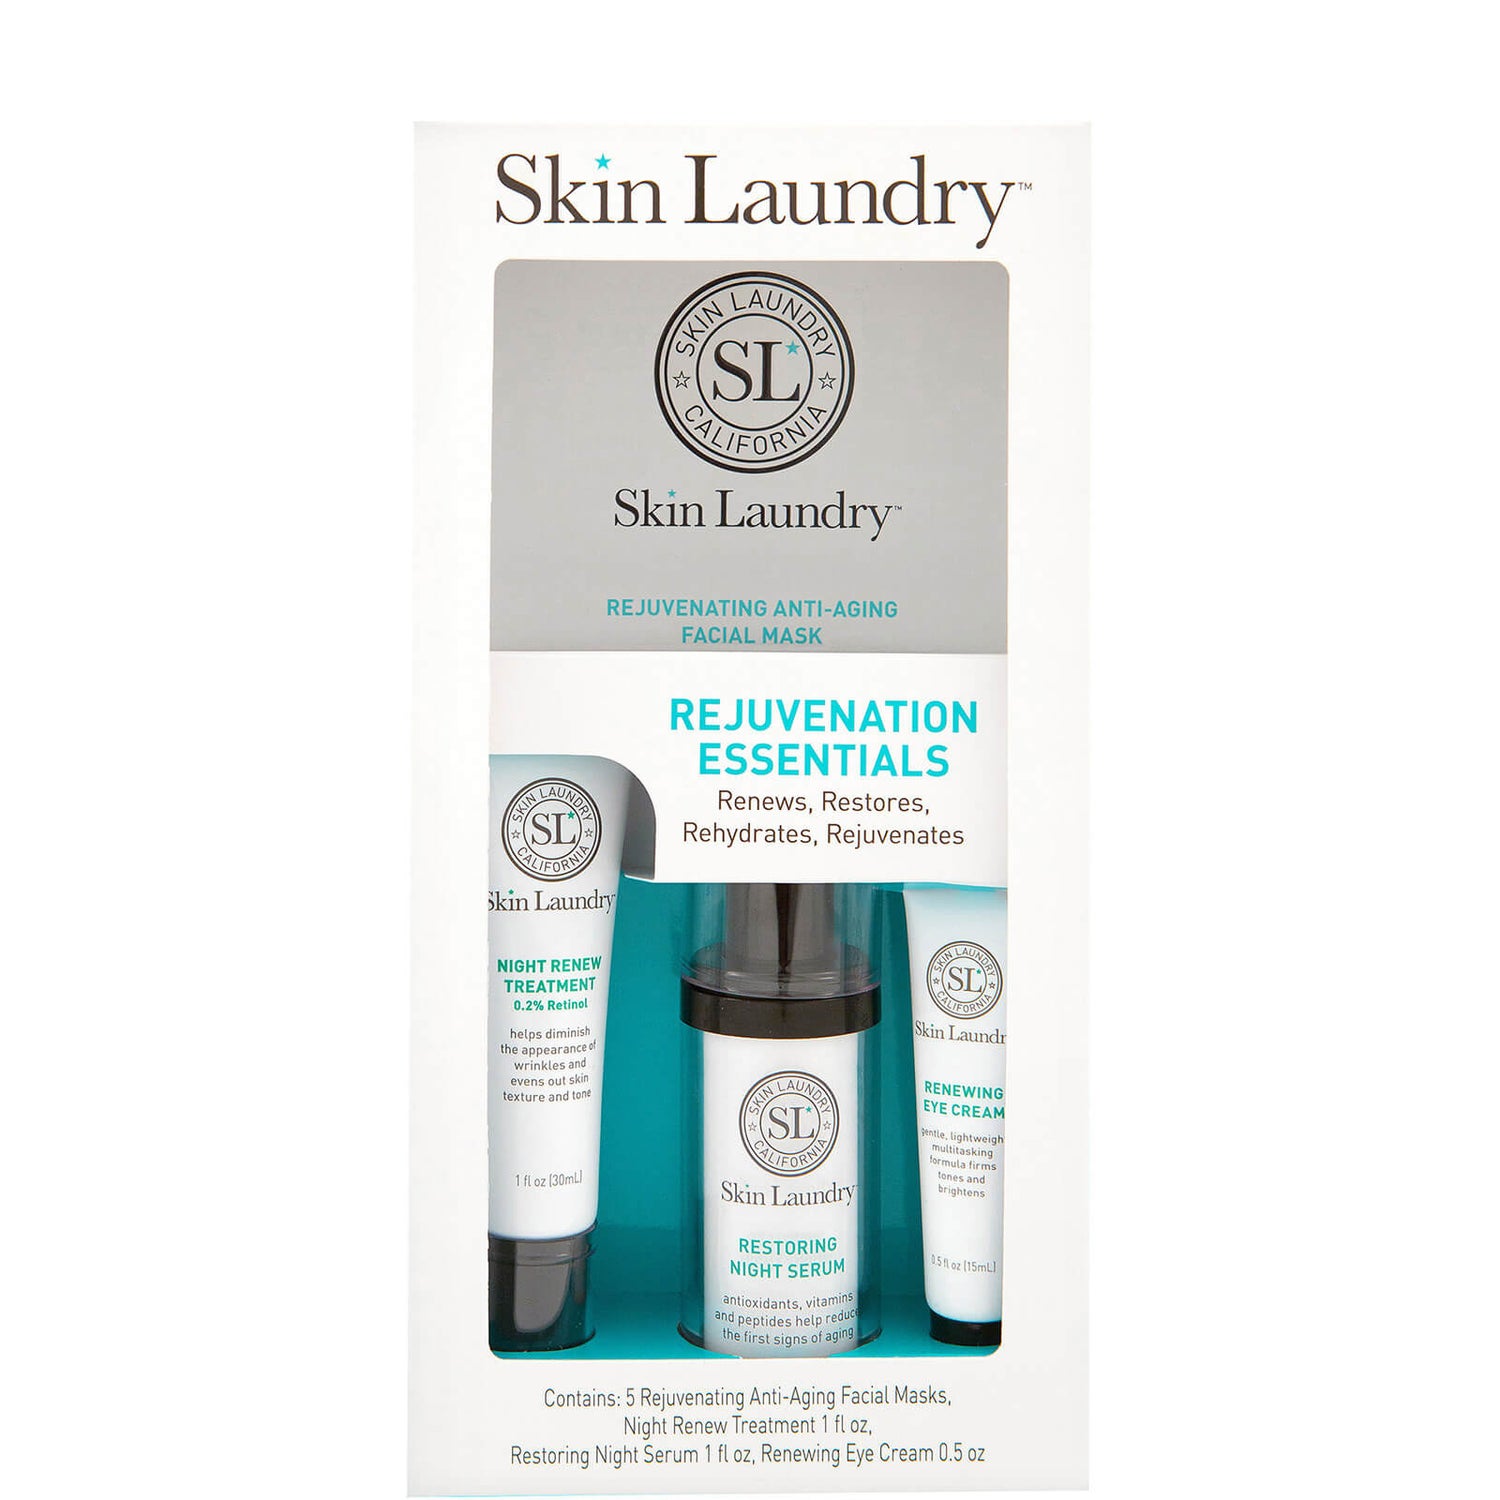 Skin Laundry Rejuvenation Essentials Kit